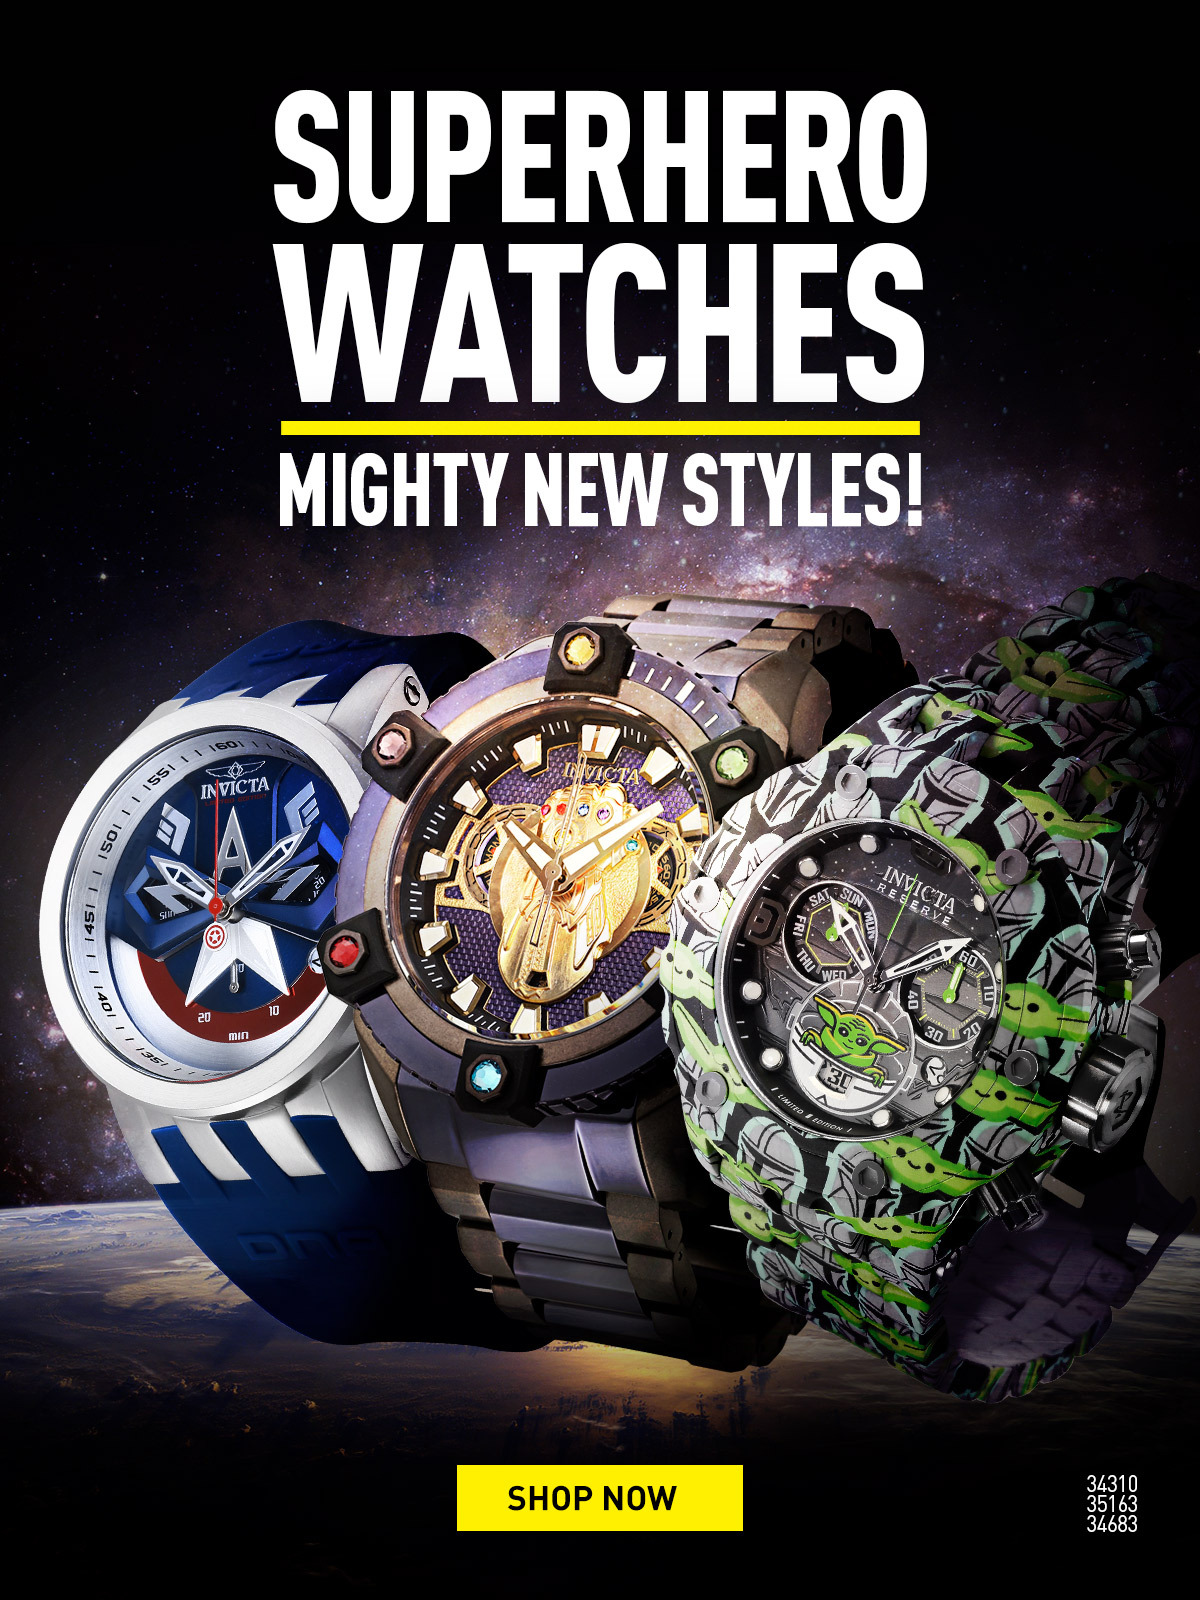 Superhero Watches. Mighty new styles!